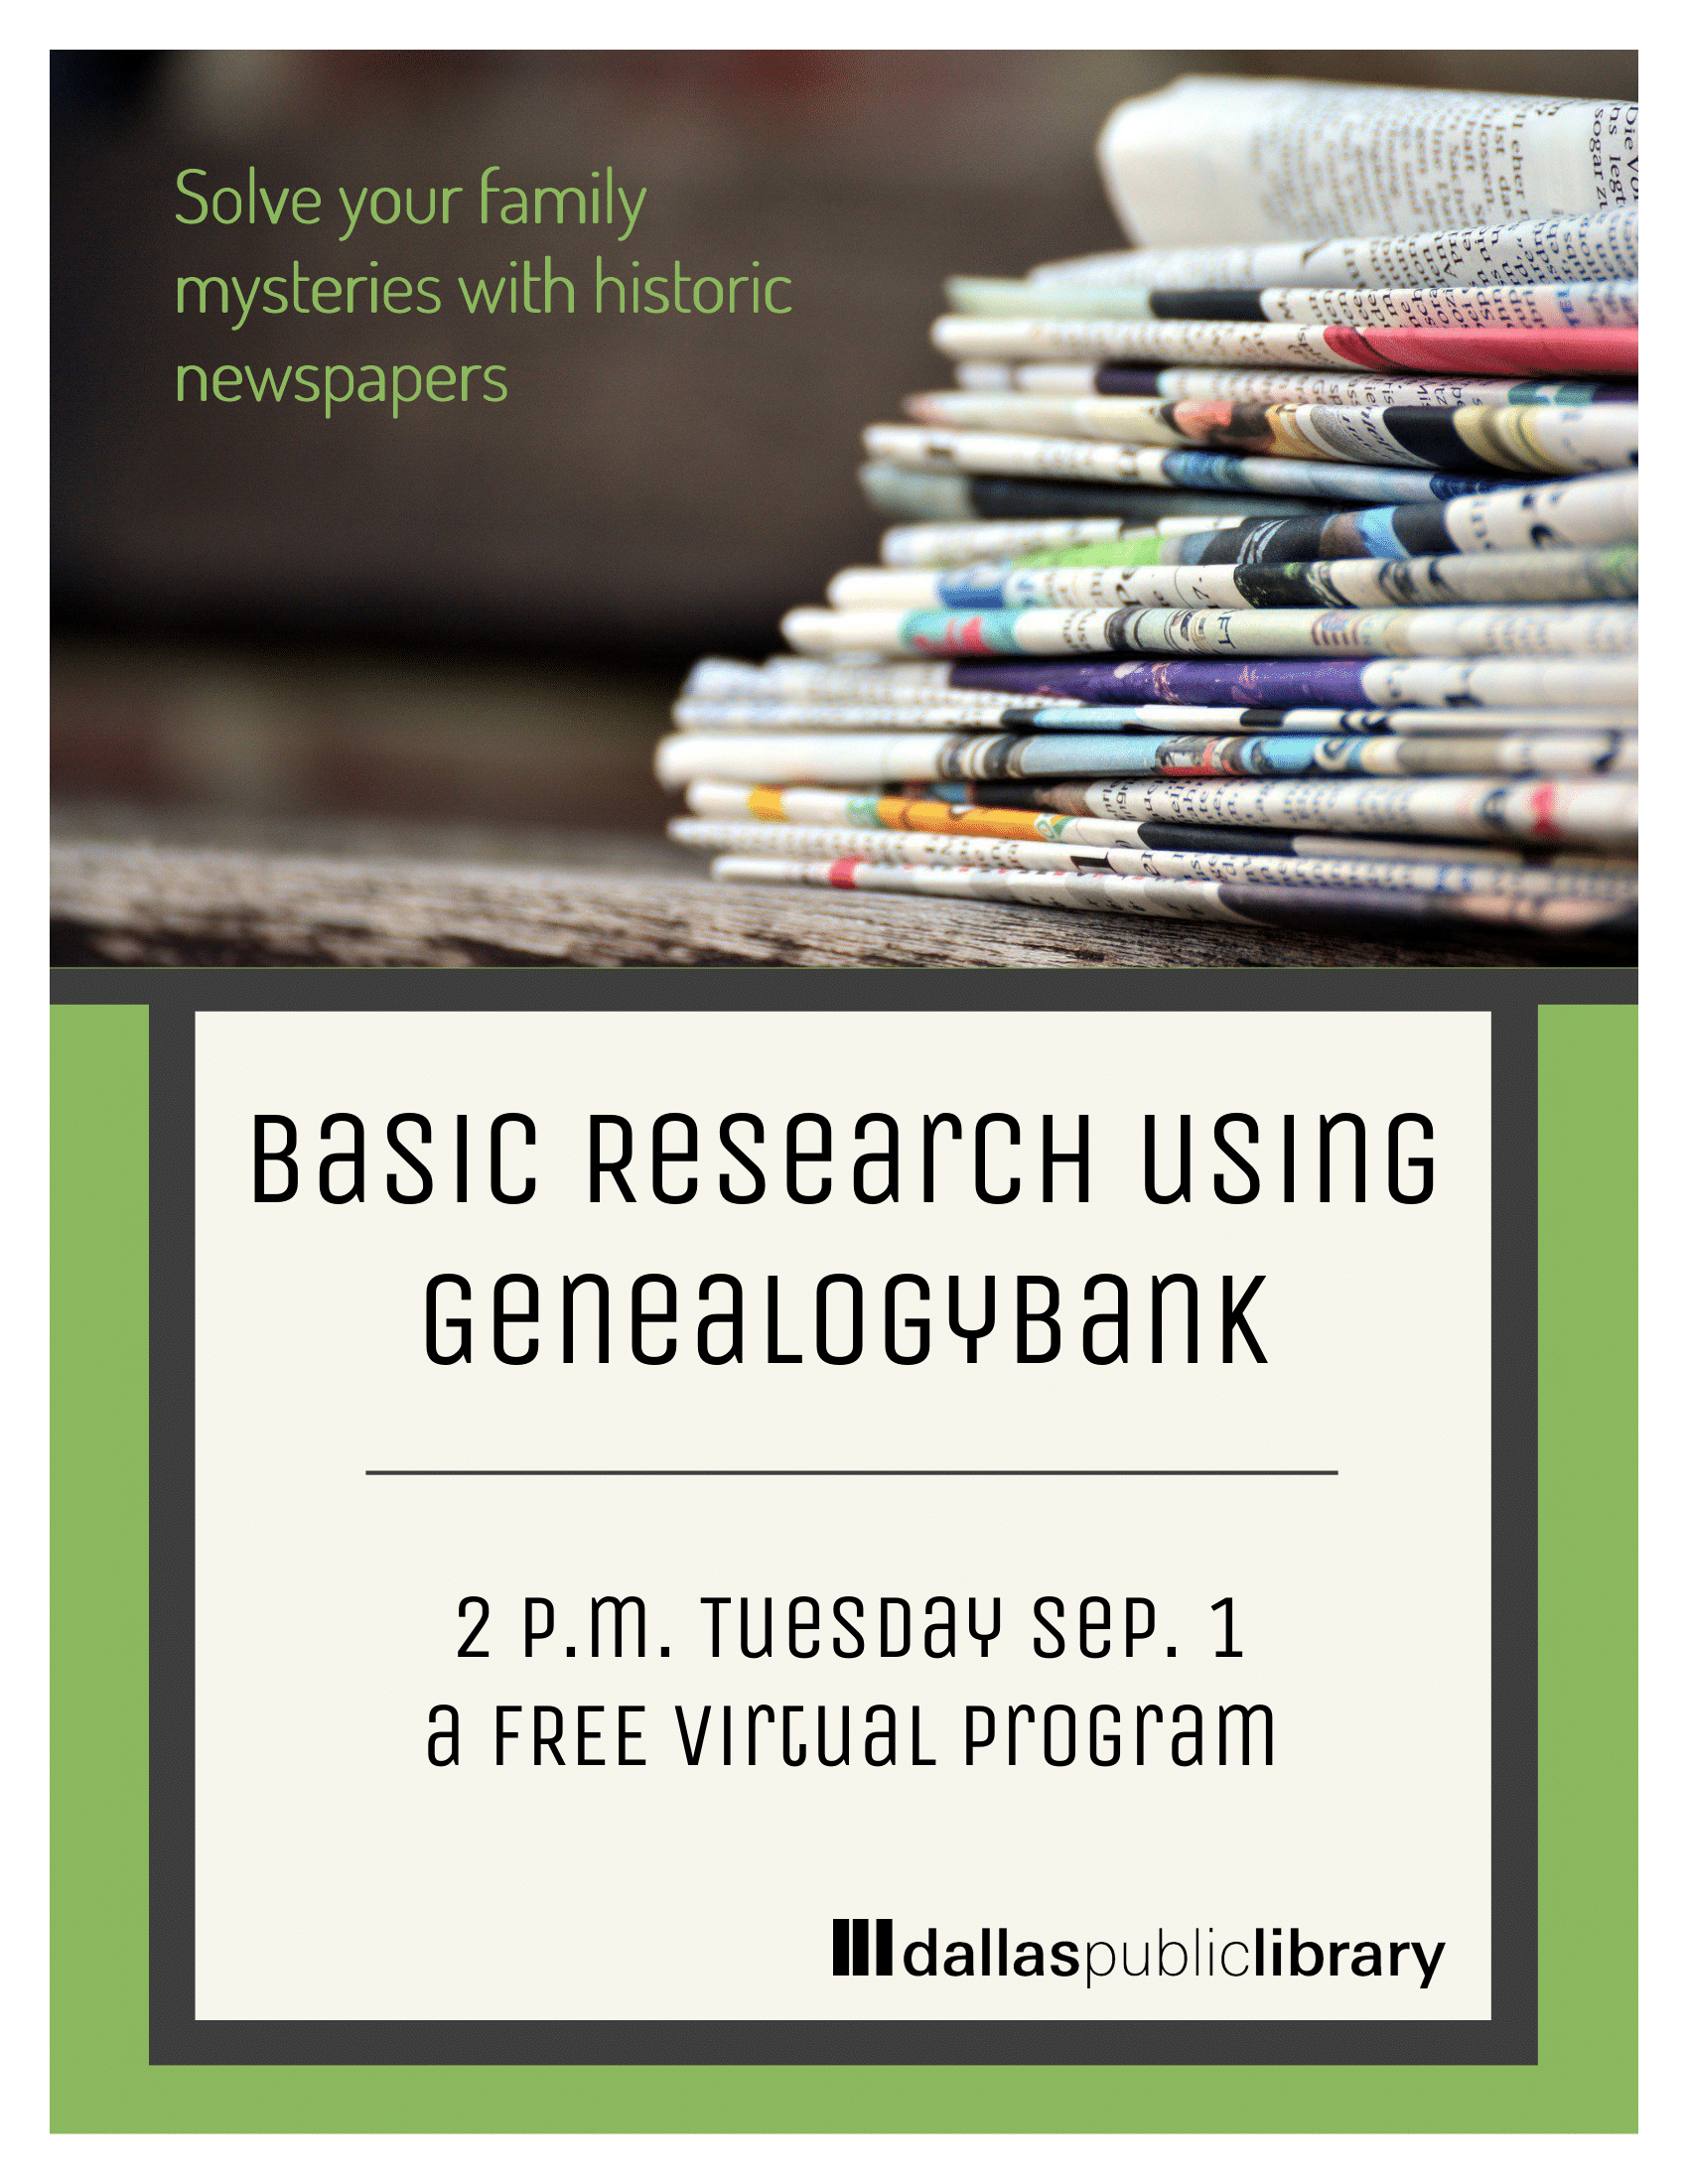 Basic Research using GenealogyBank